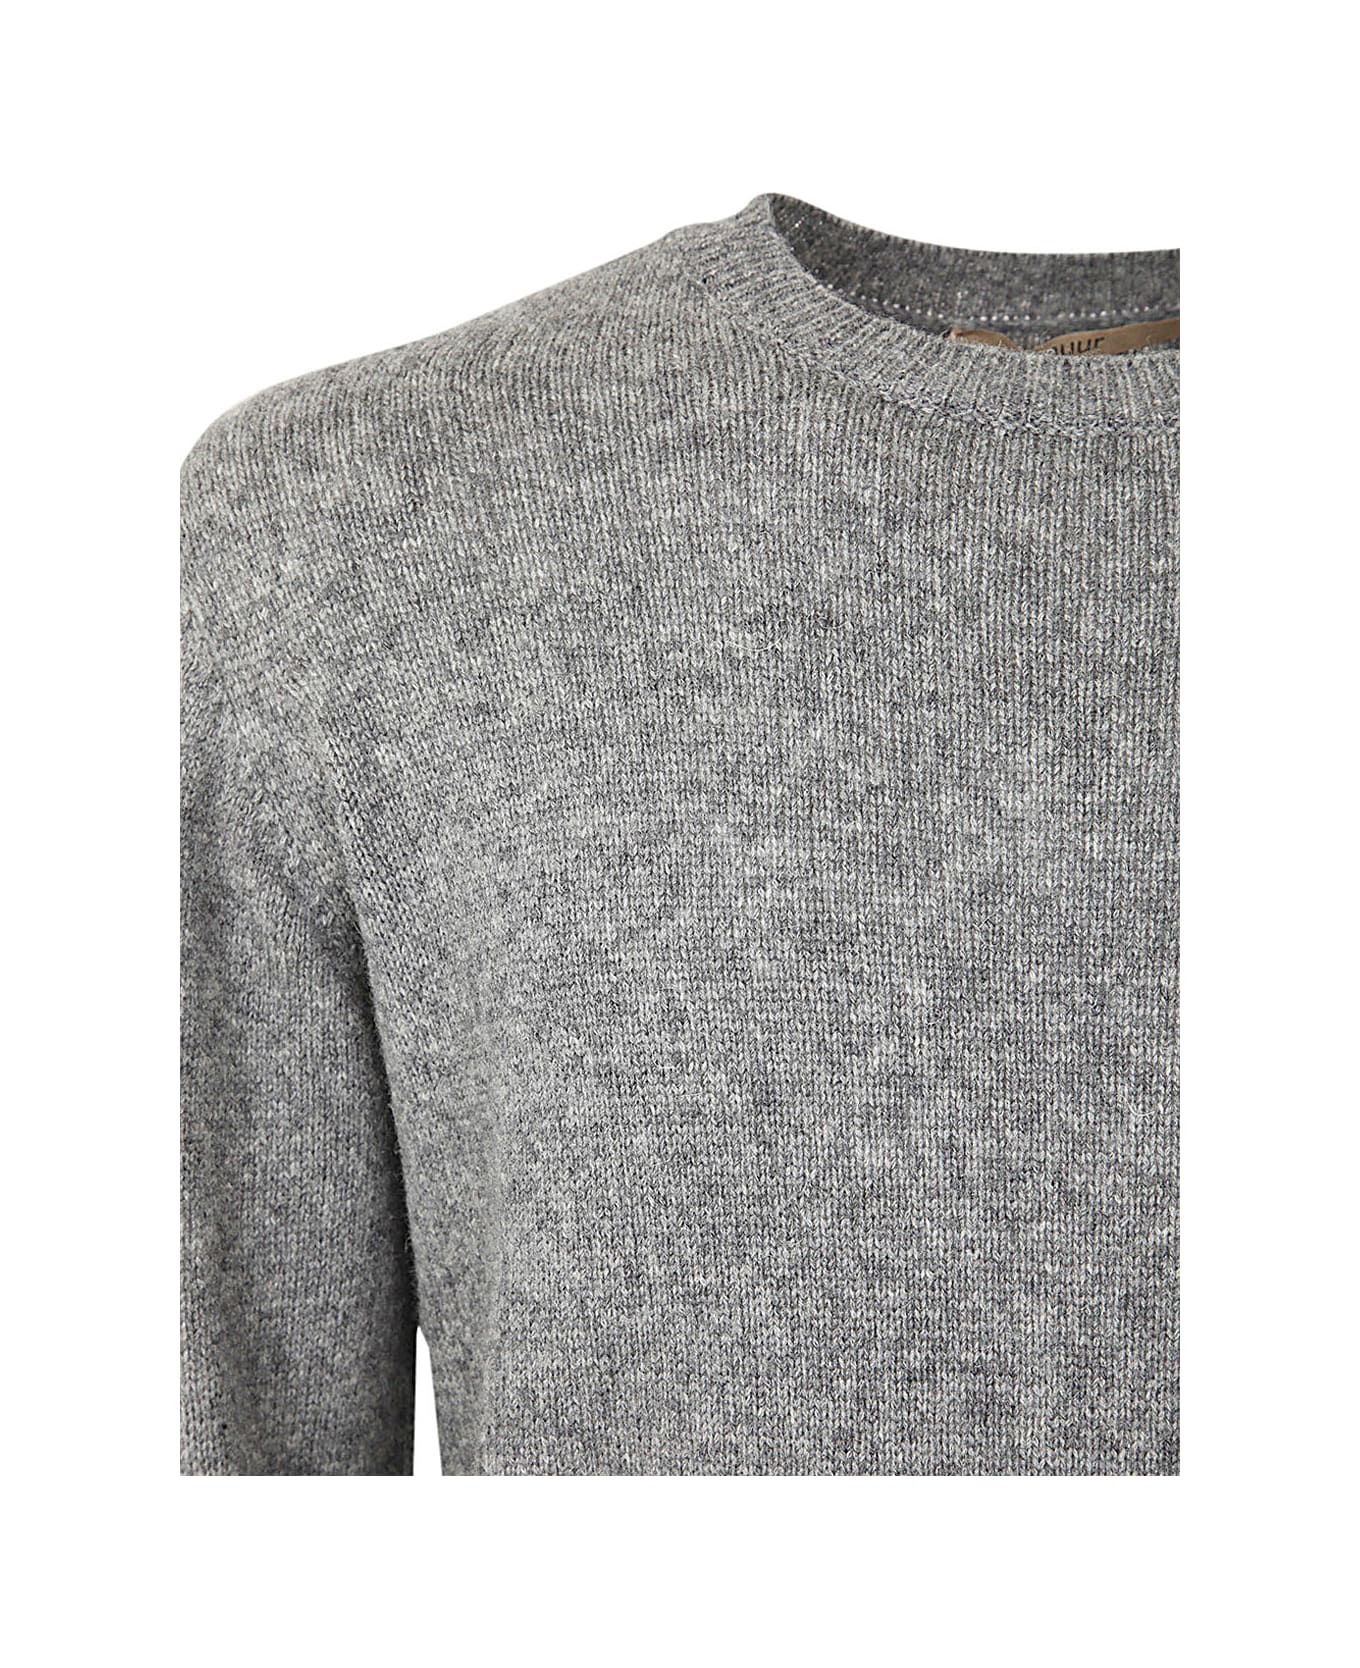 Nuur Long Sleeves Crew Neck Sweater - Grey